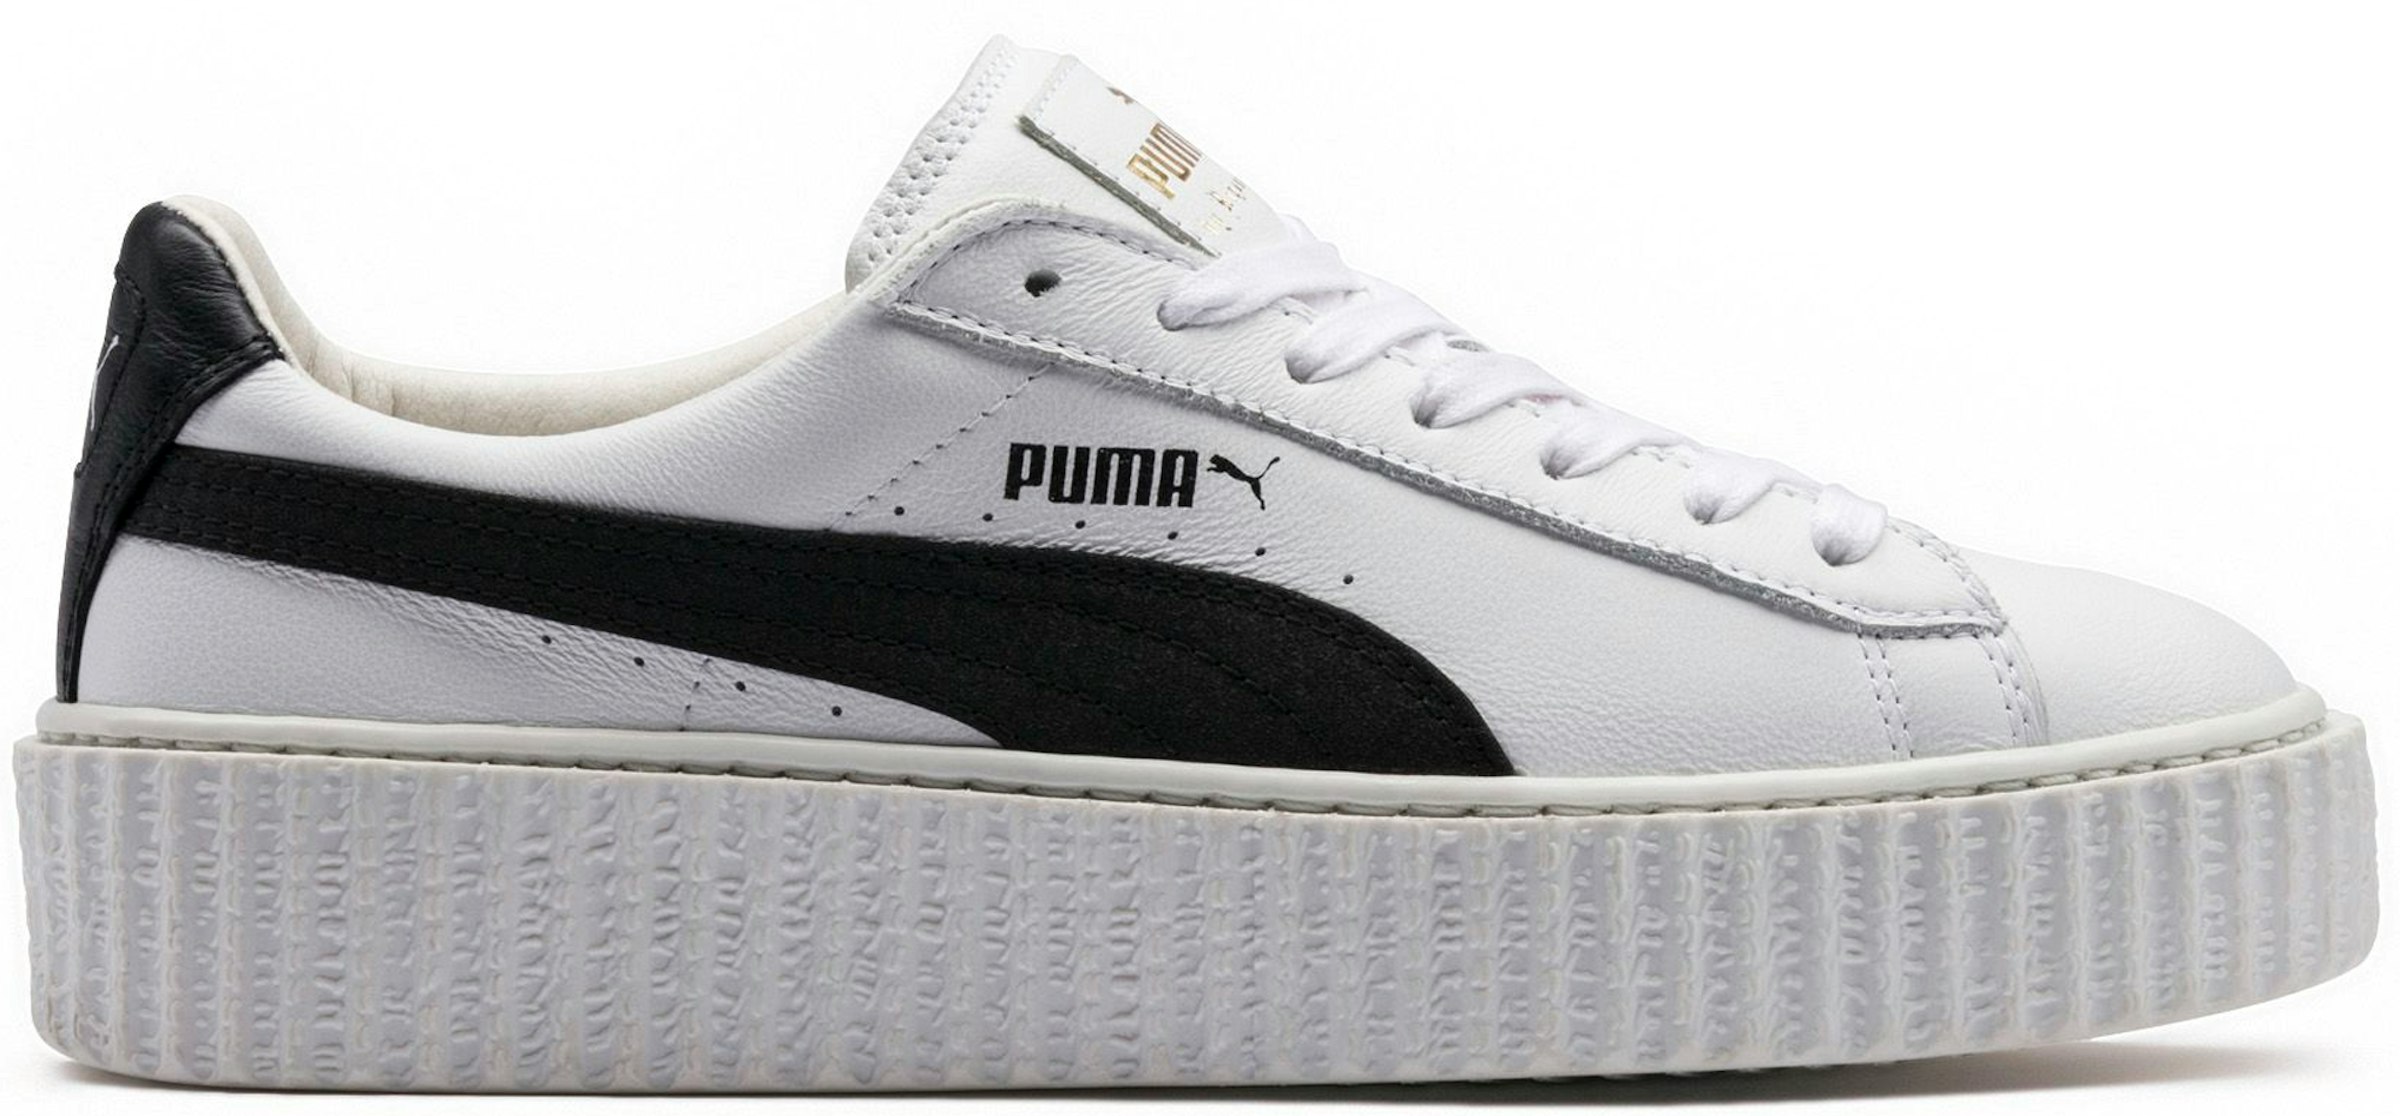 Puma Rihanna Fenty Leather White - 364640-01 US